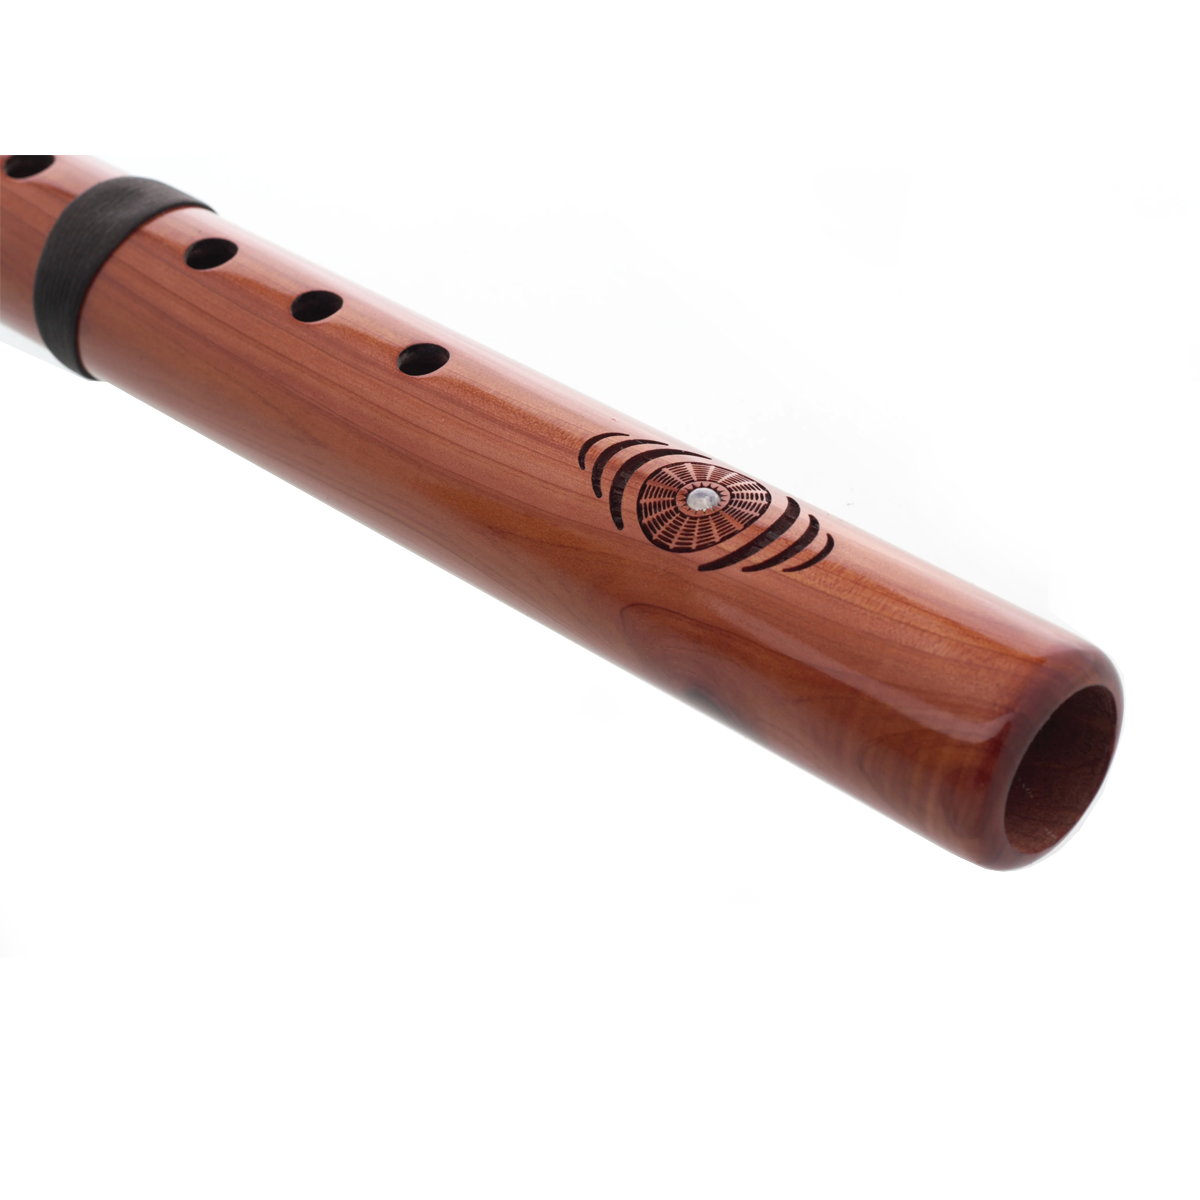 Pentatonic wooden flute to buy in australia 